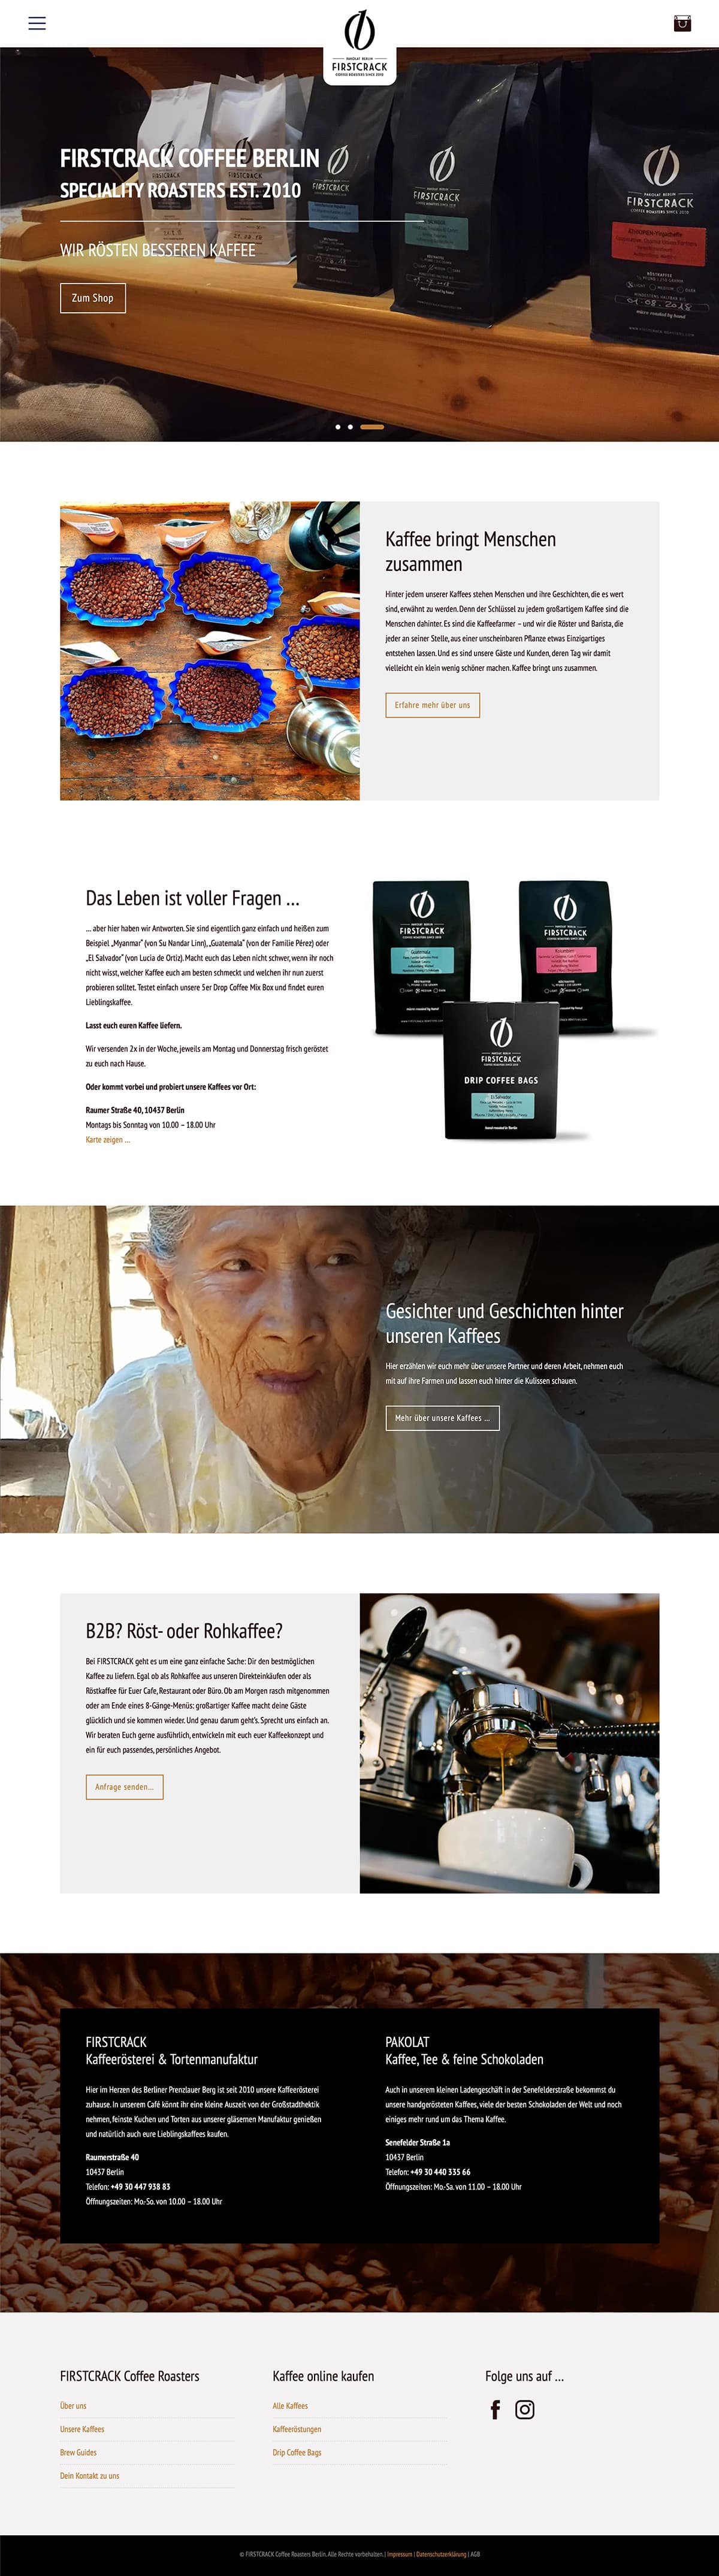 Webdesign Berlin: Firstcrack Coffee Roasters